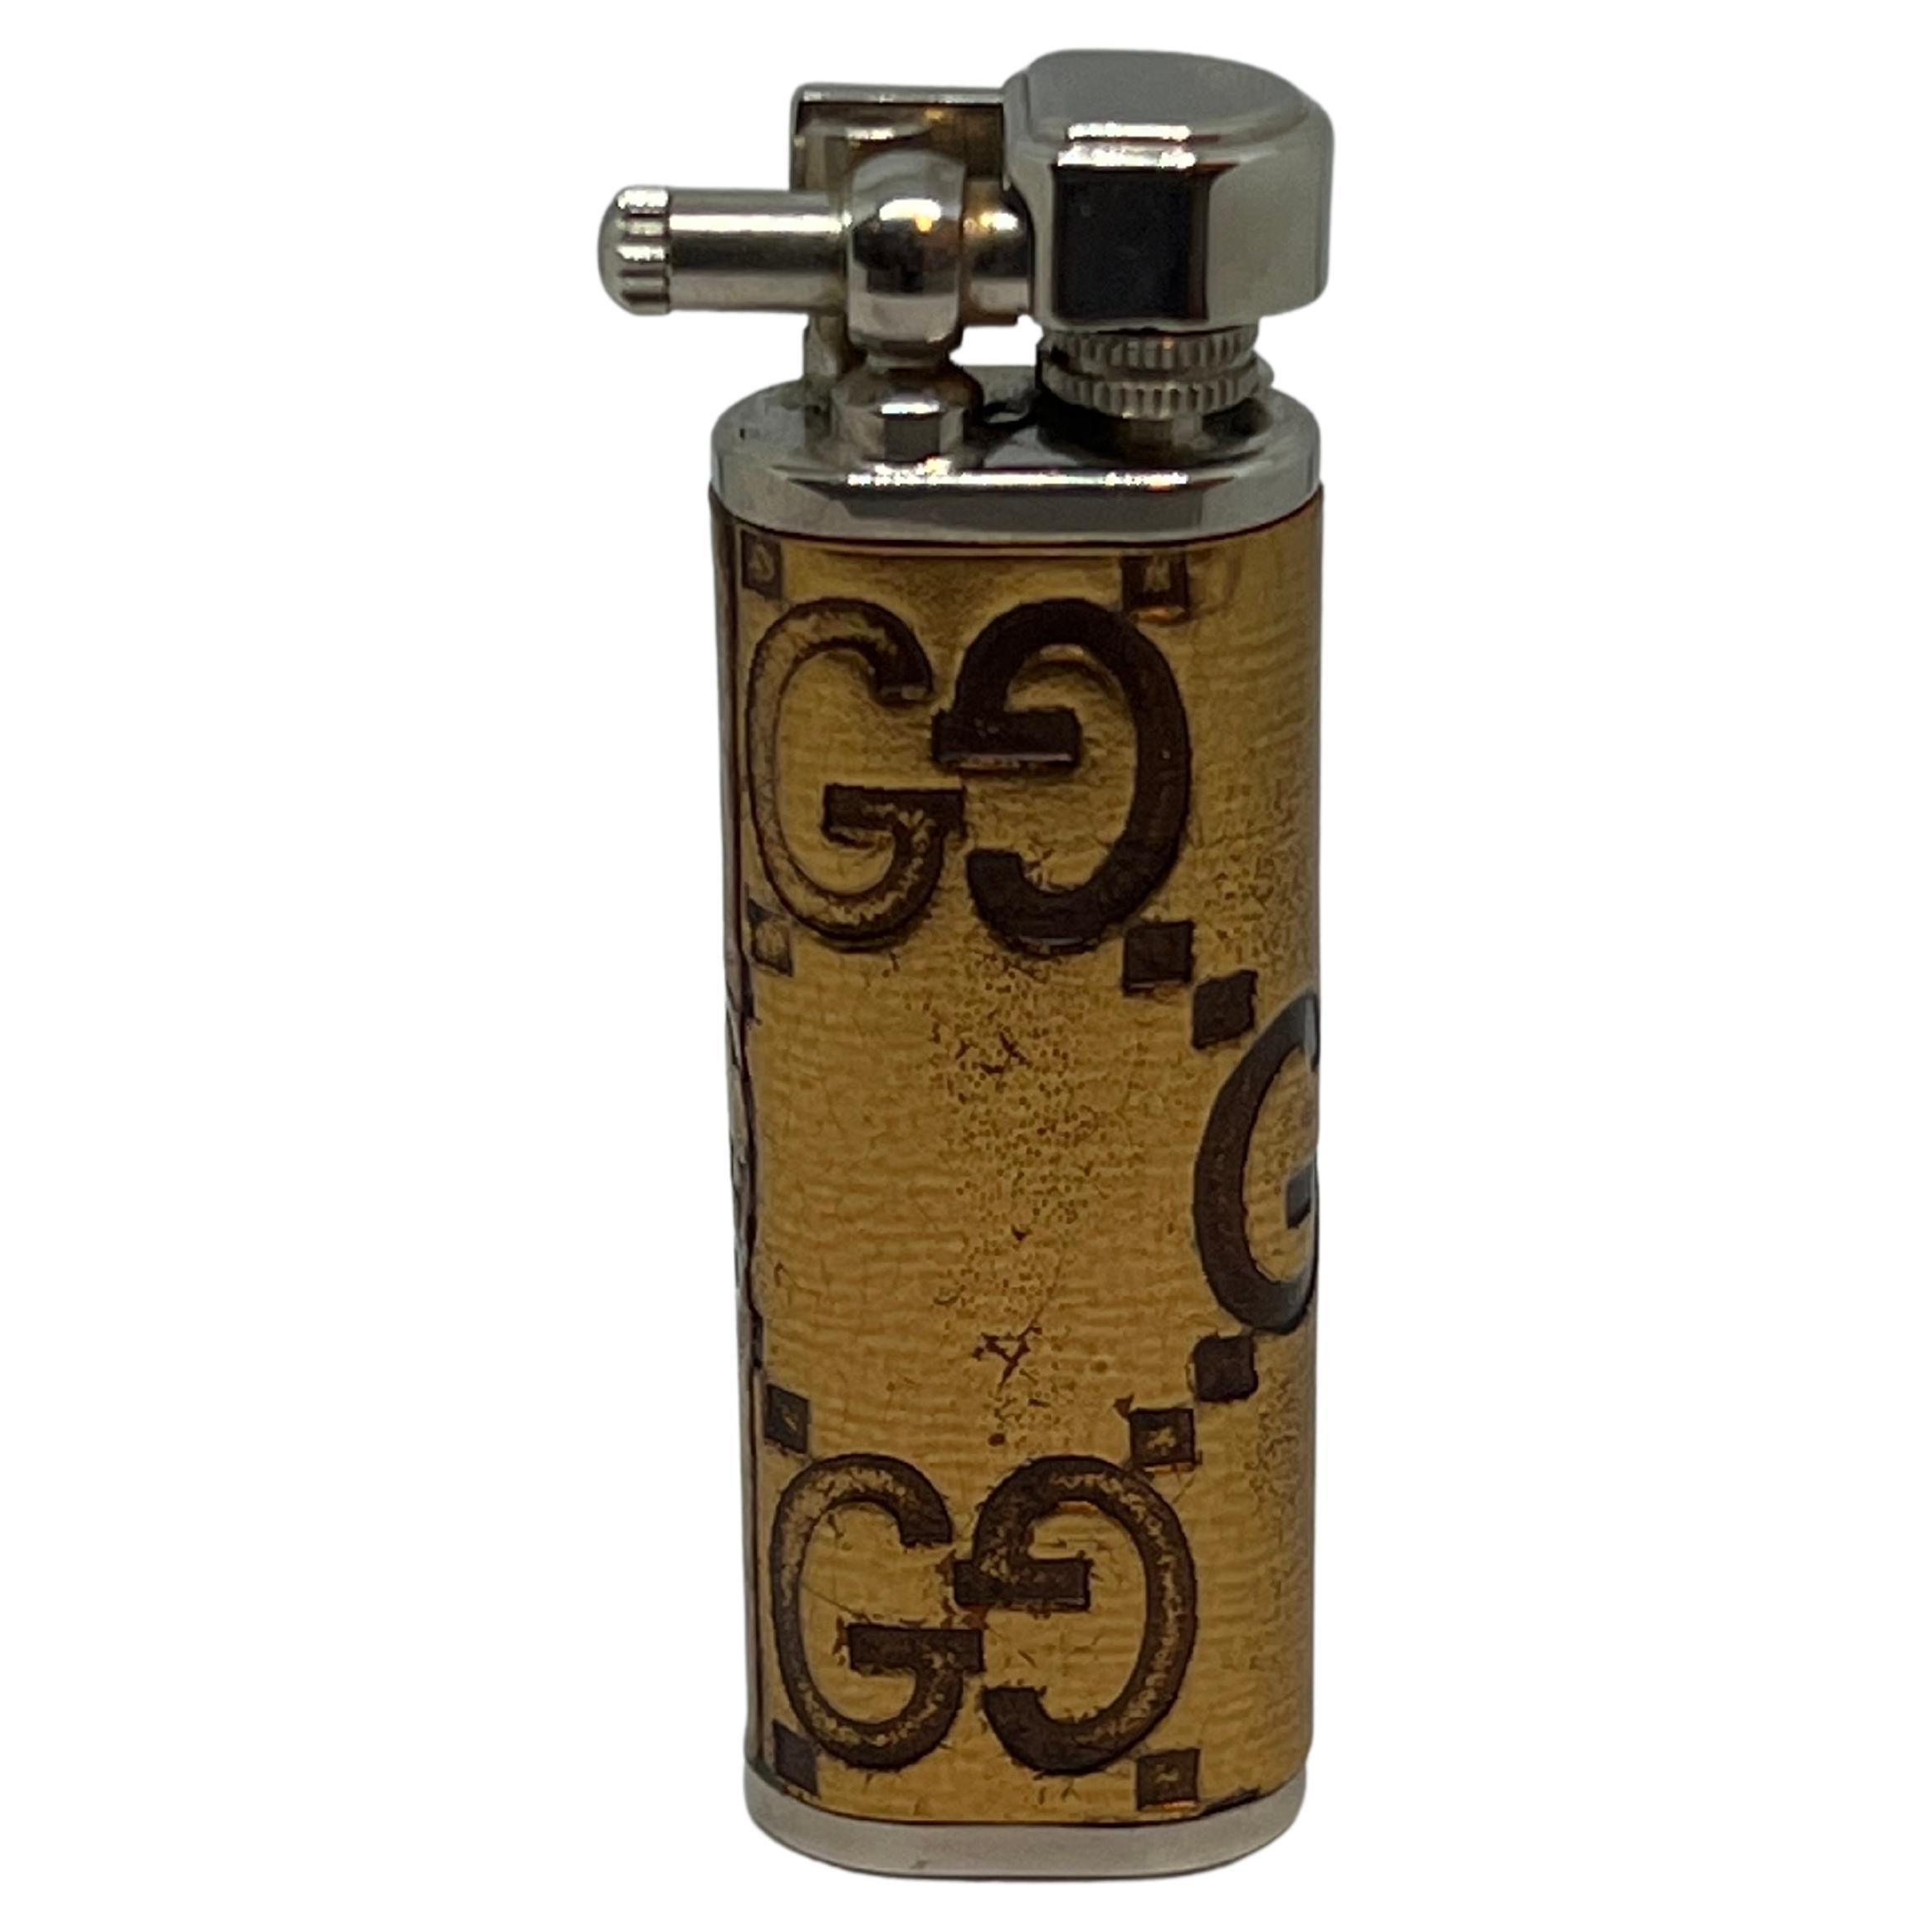 Retro & Vintage “Gucci” Gold Lather Lighter 80’s circa